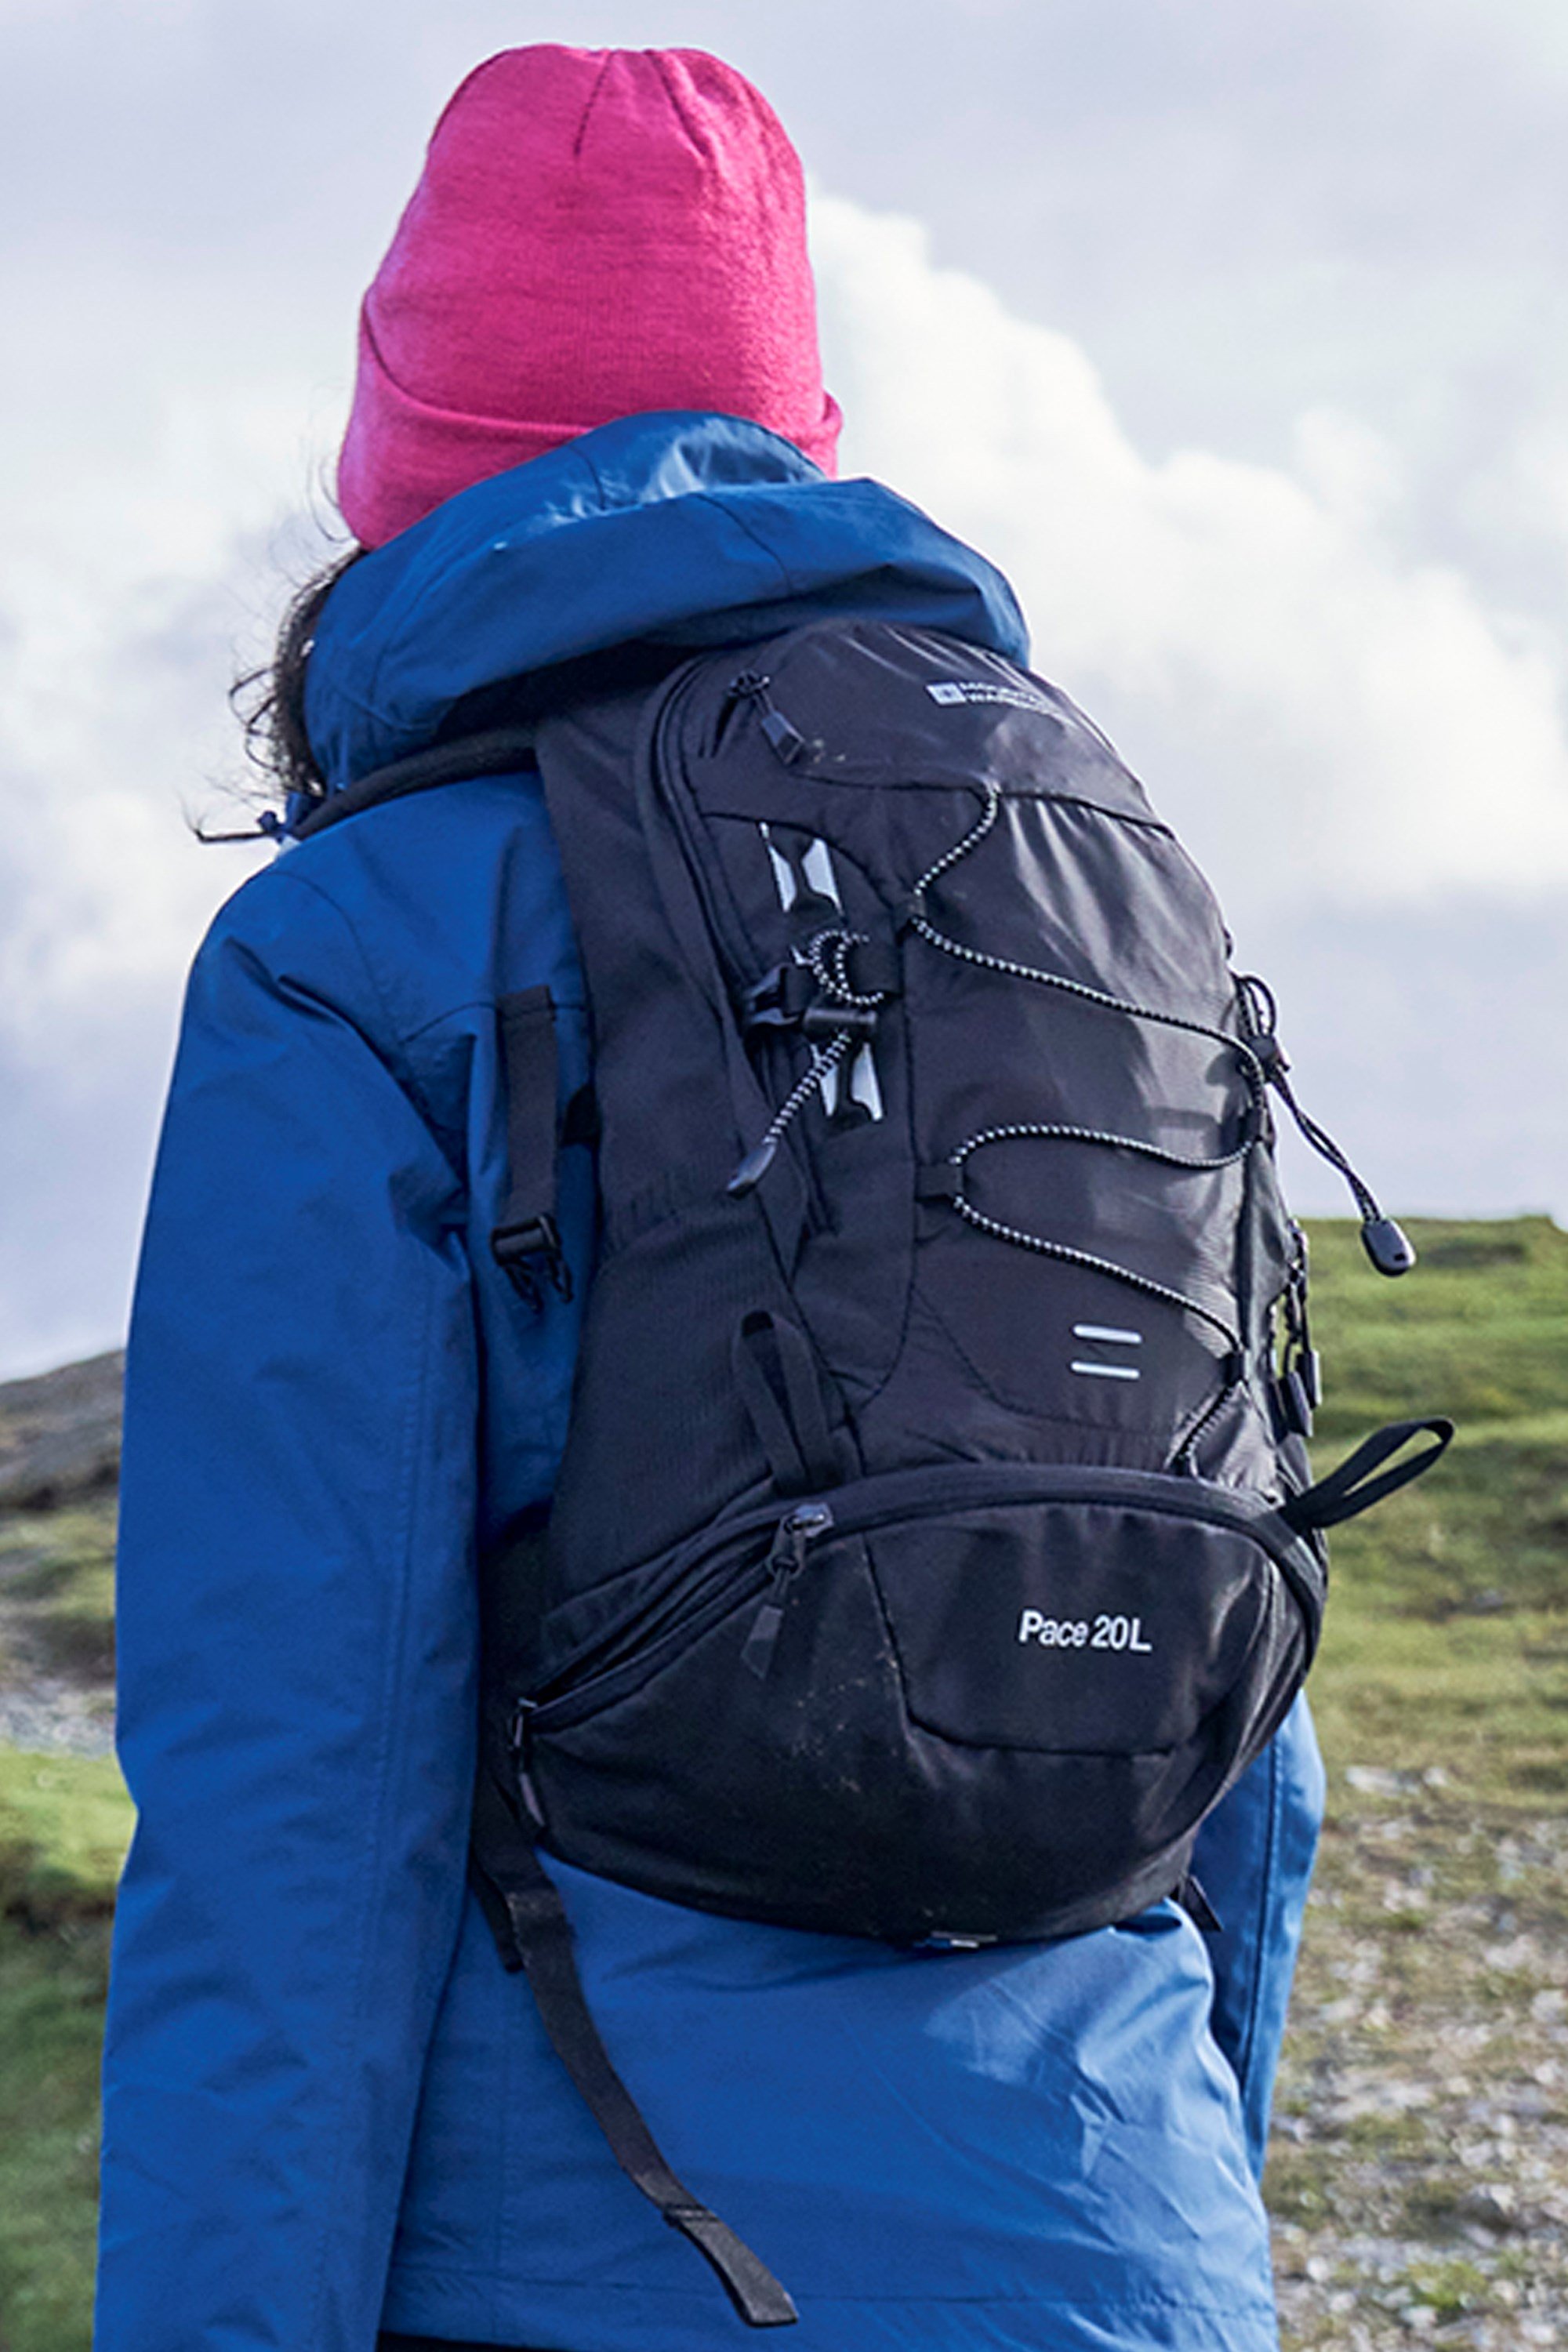 Hiking Bag Pictures | Download Free Images on Unsplash